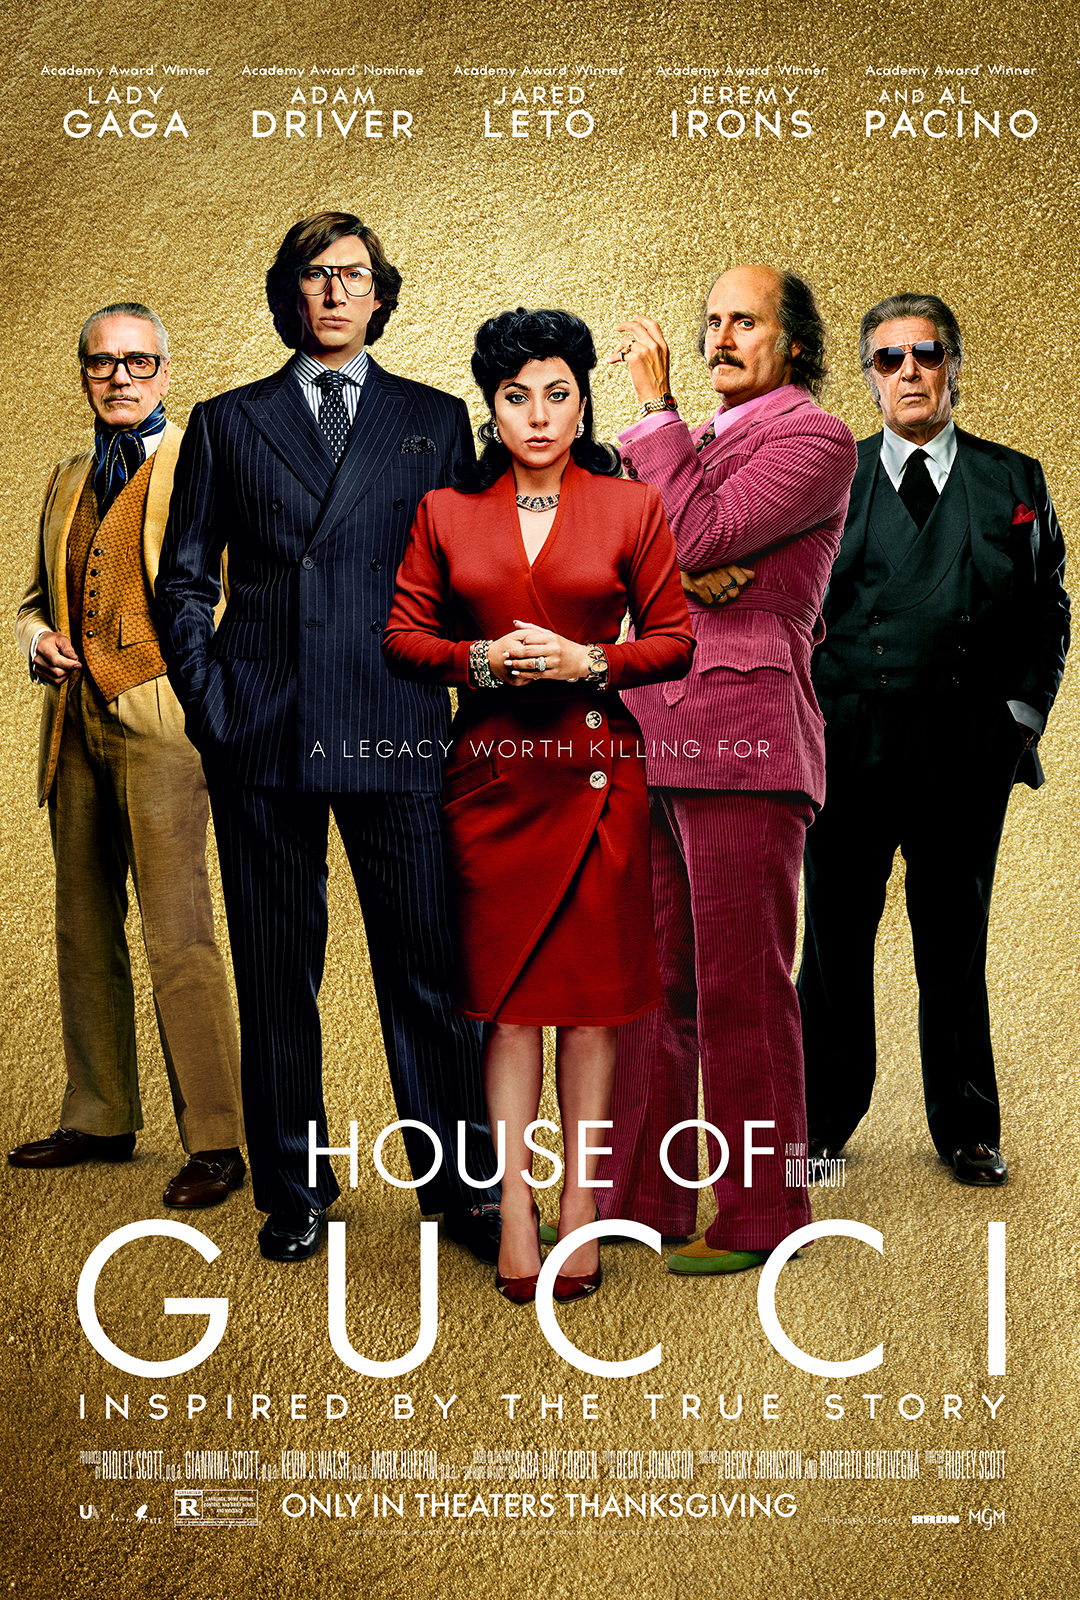 Stiahni si Filmy CZ/SK dabing Klan Gucci / House of Gucci (2021)(CZ)[1080p] = CSFD 72%